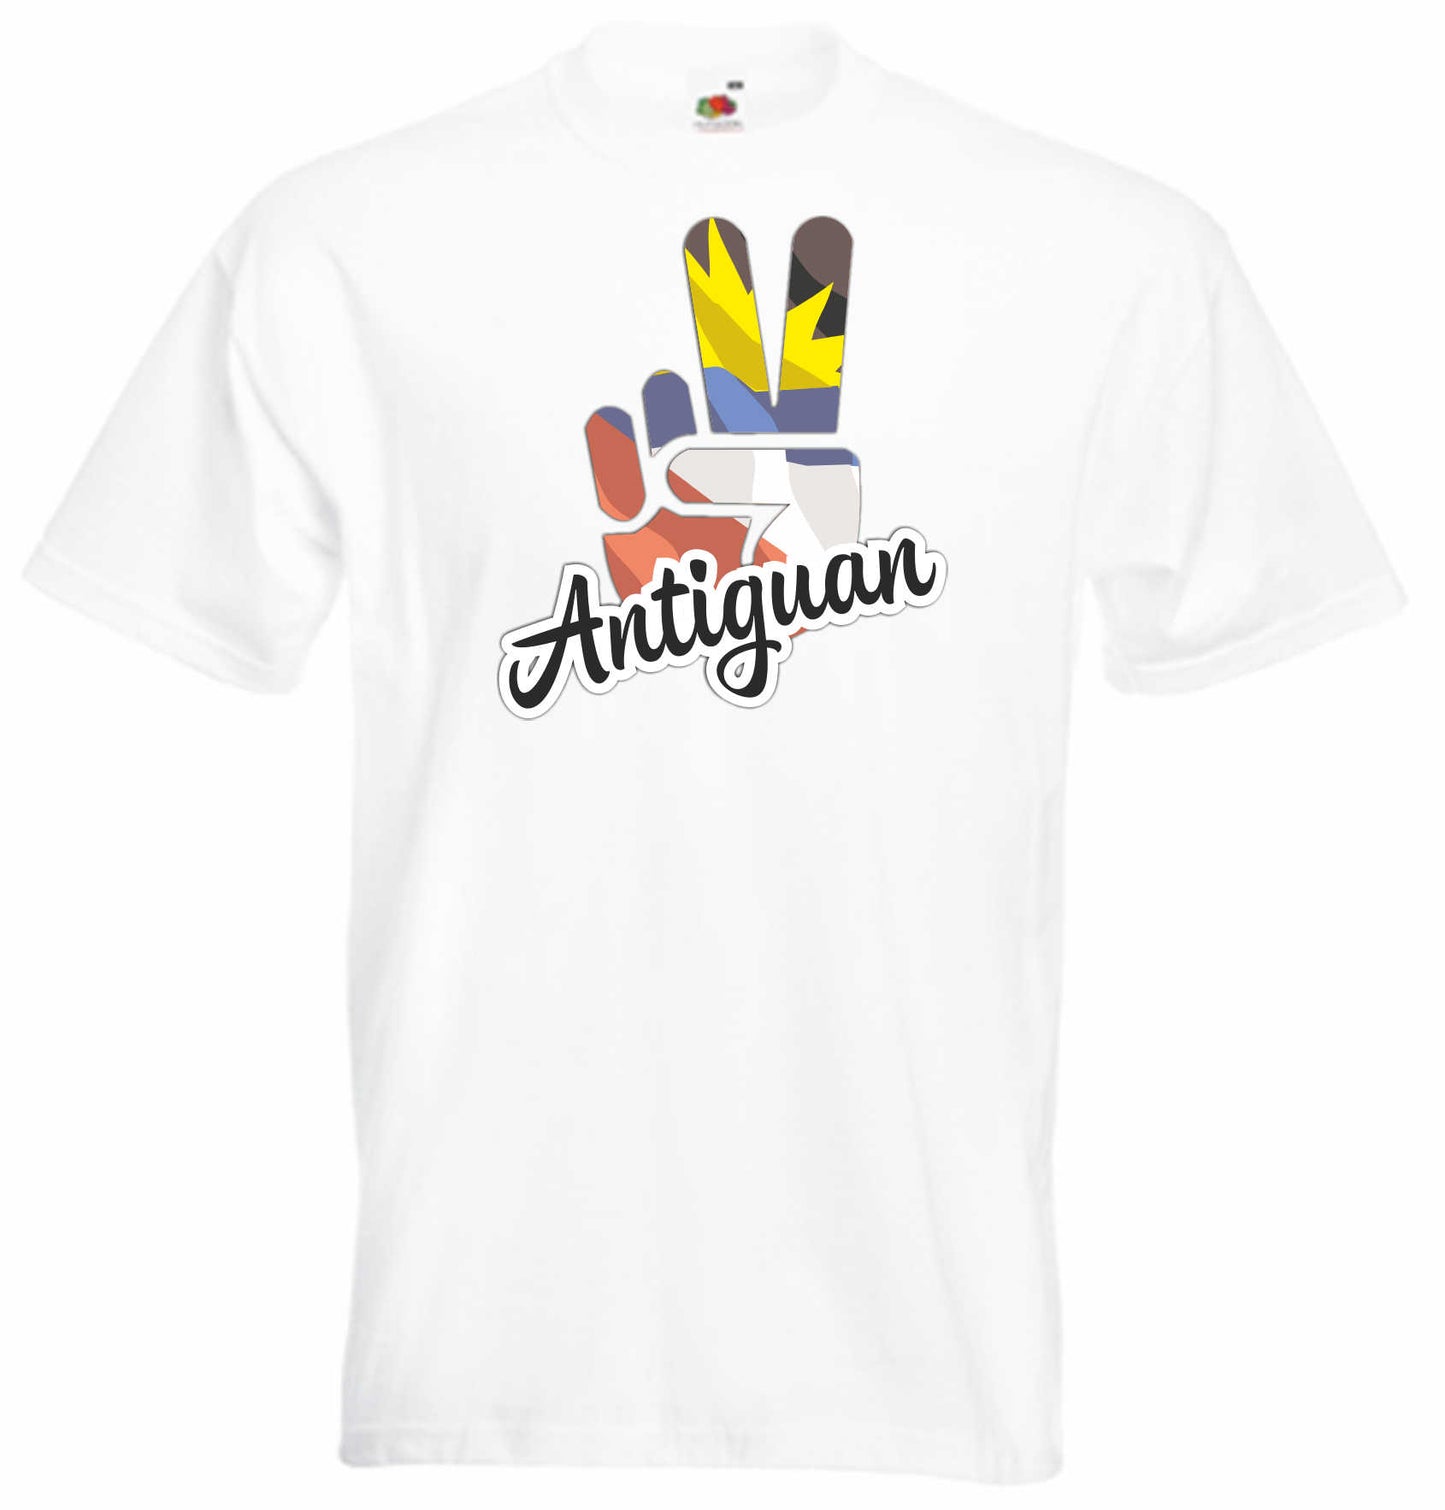 T-Shirt Herren - Victory - Flagge / Fahne - Antiguan - Sieg